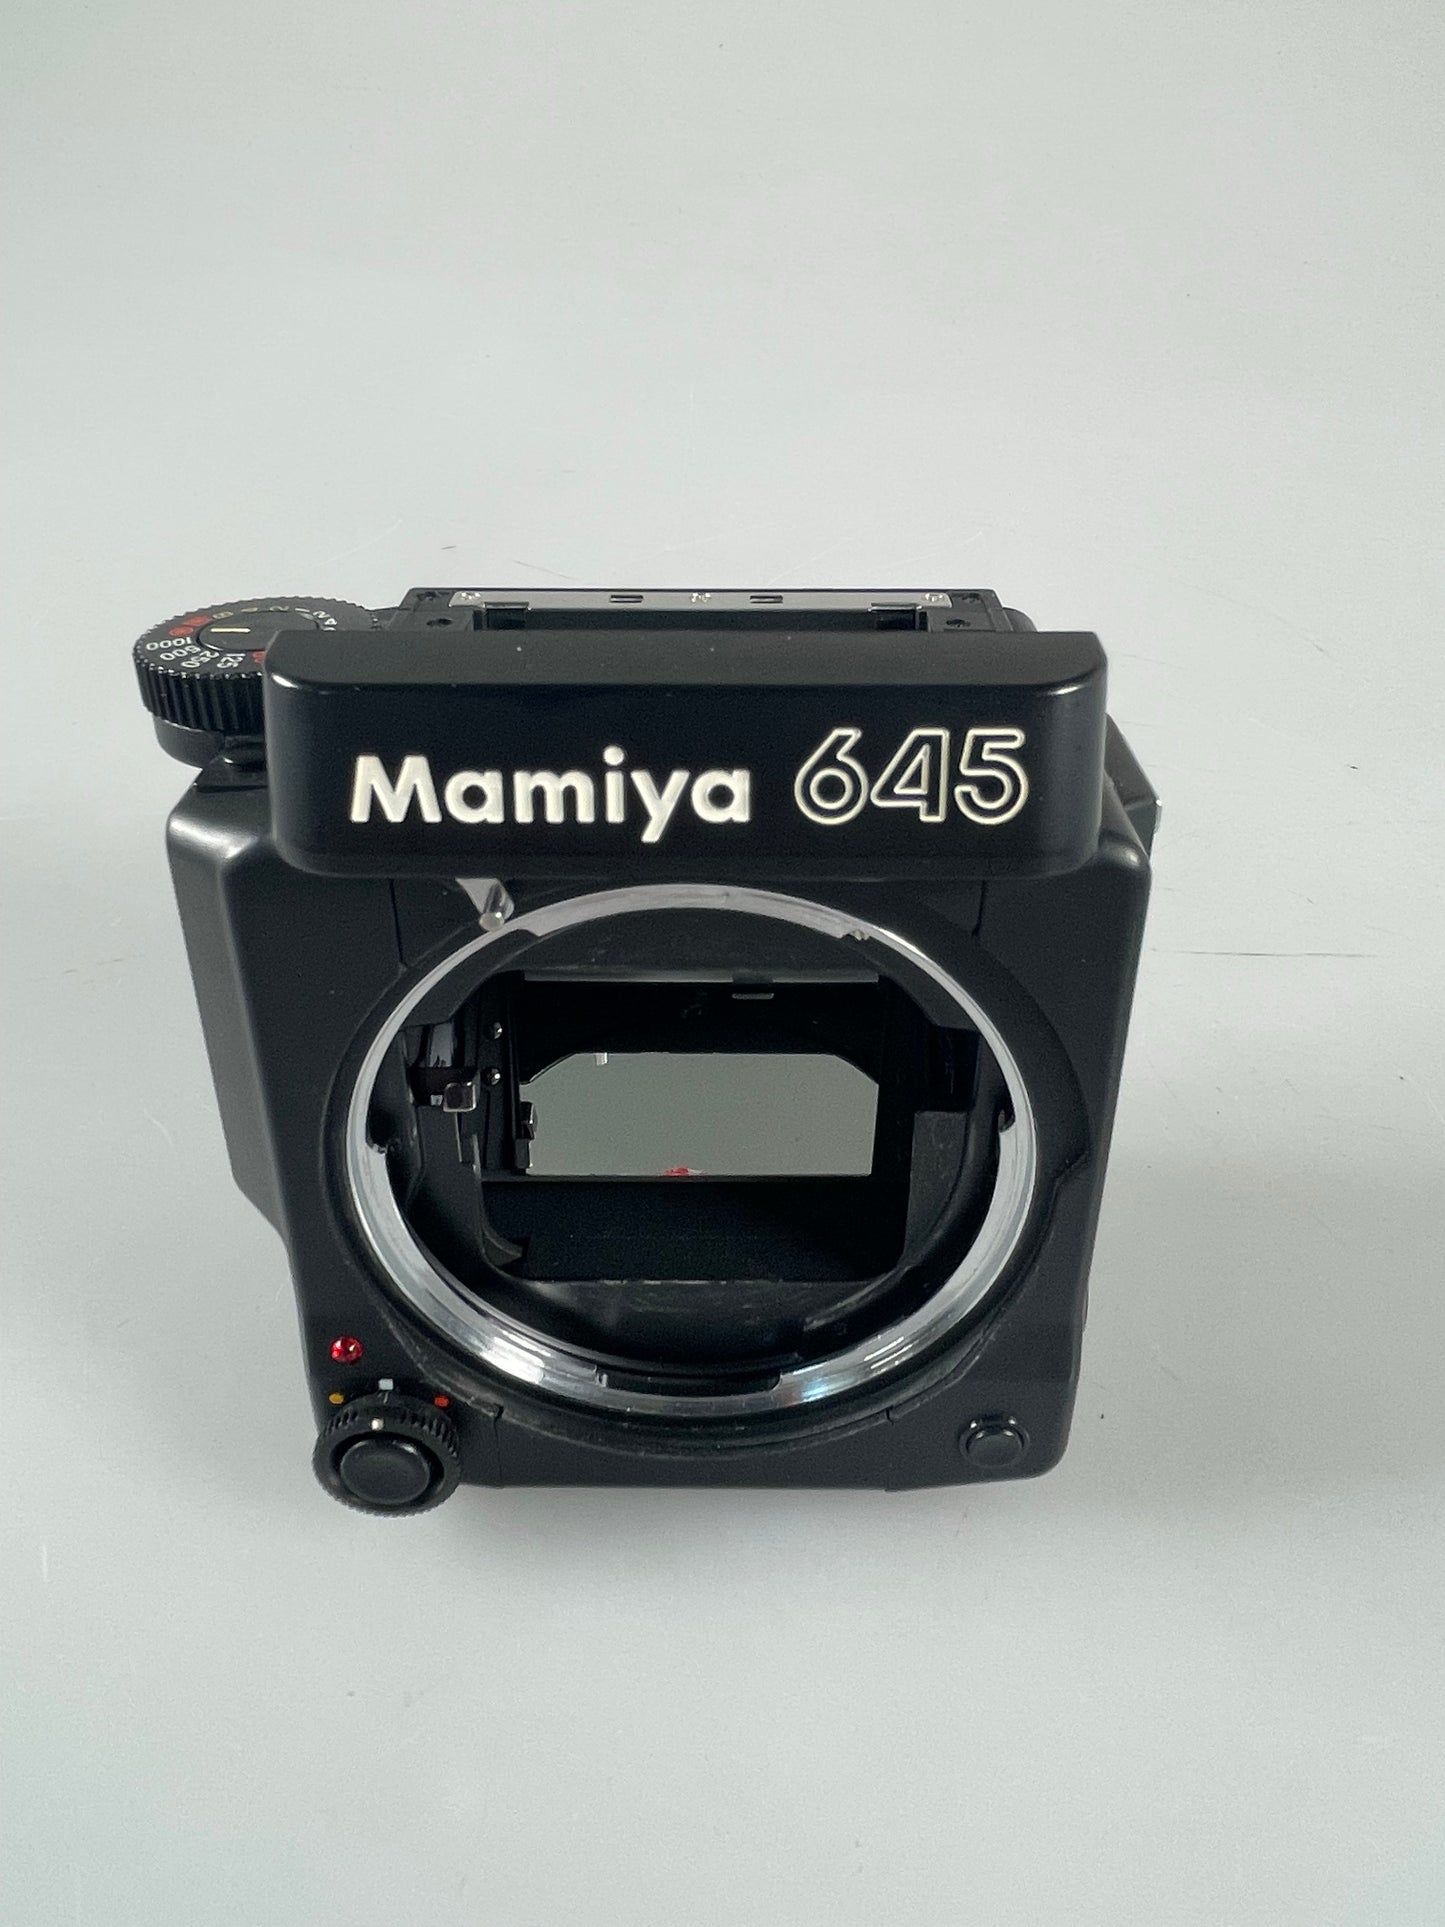 Mamiya 645 Super Medium Format SLR 6x4.5 Film Camera Body Only